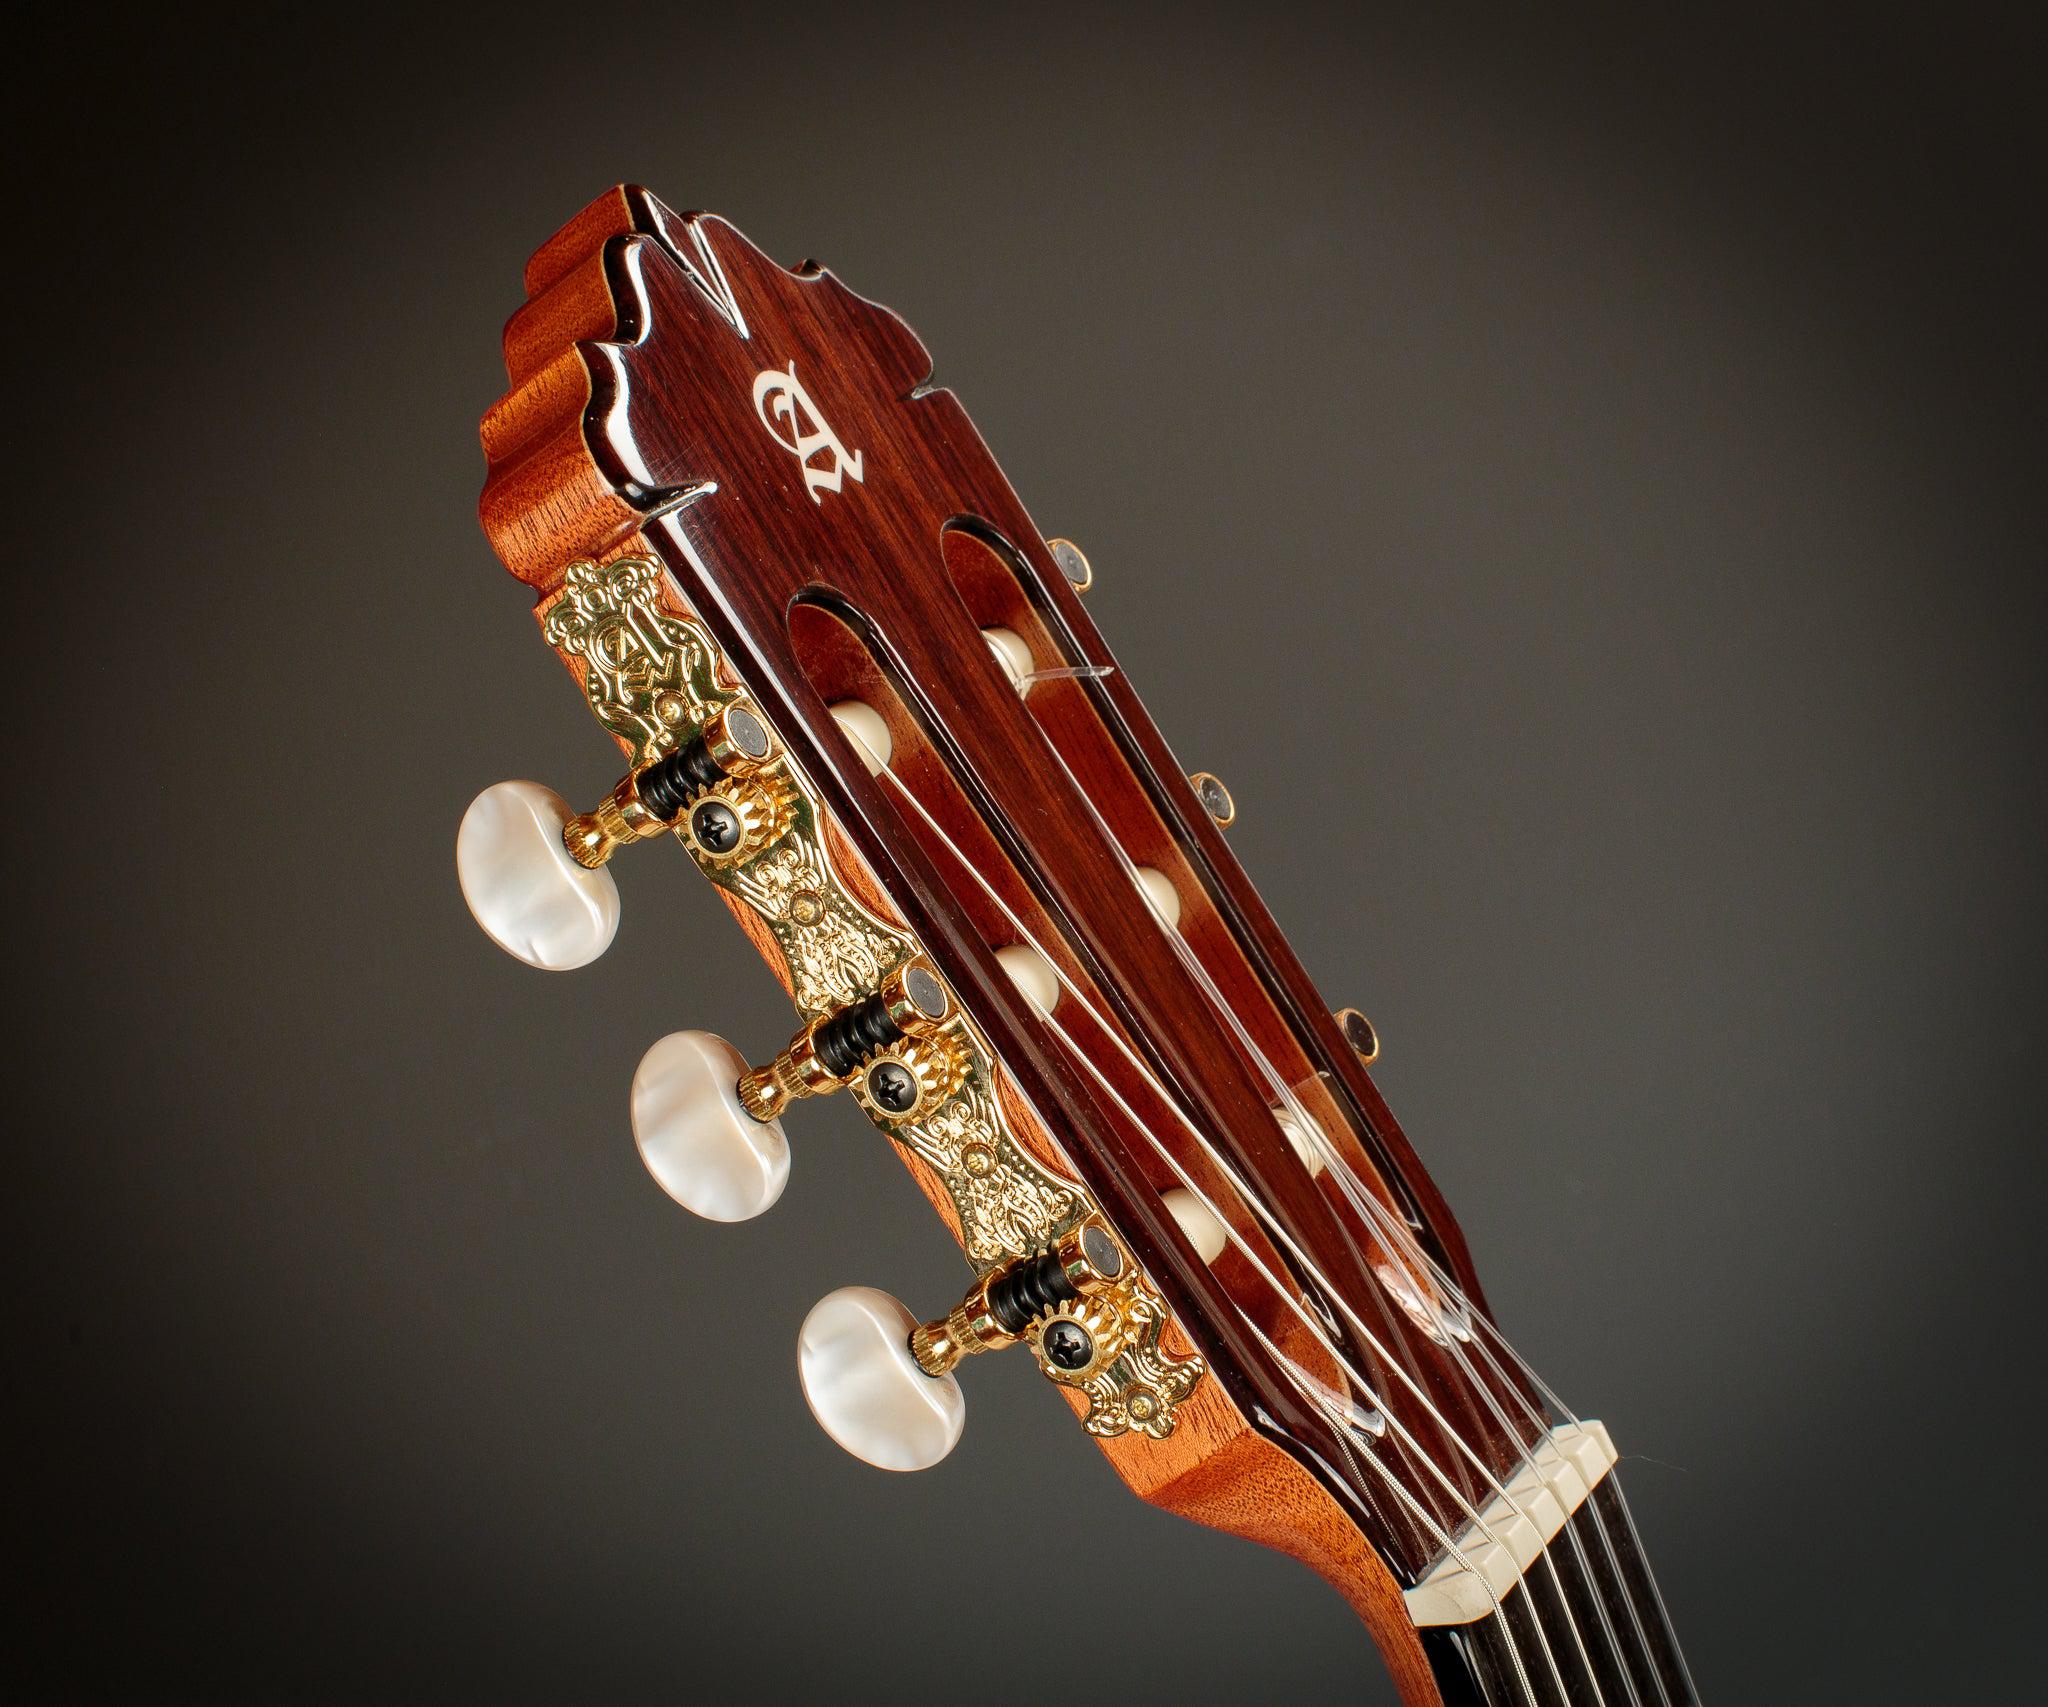 Alhambra 5P Senorita 636mm Scale - 7/8 Size Classical Guitar